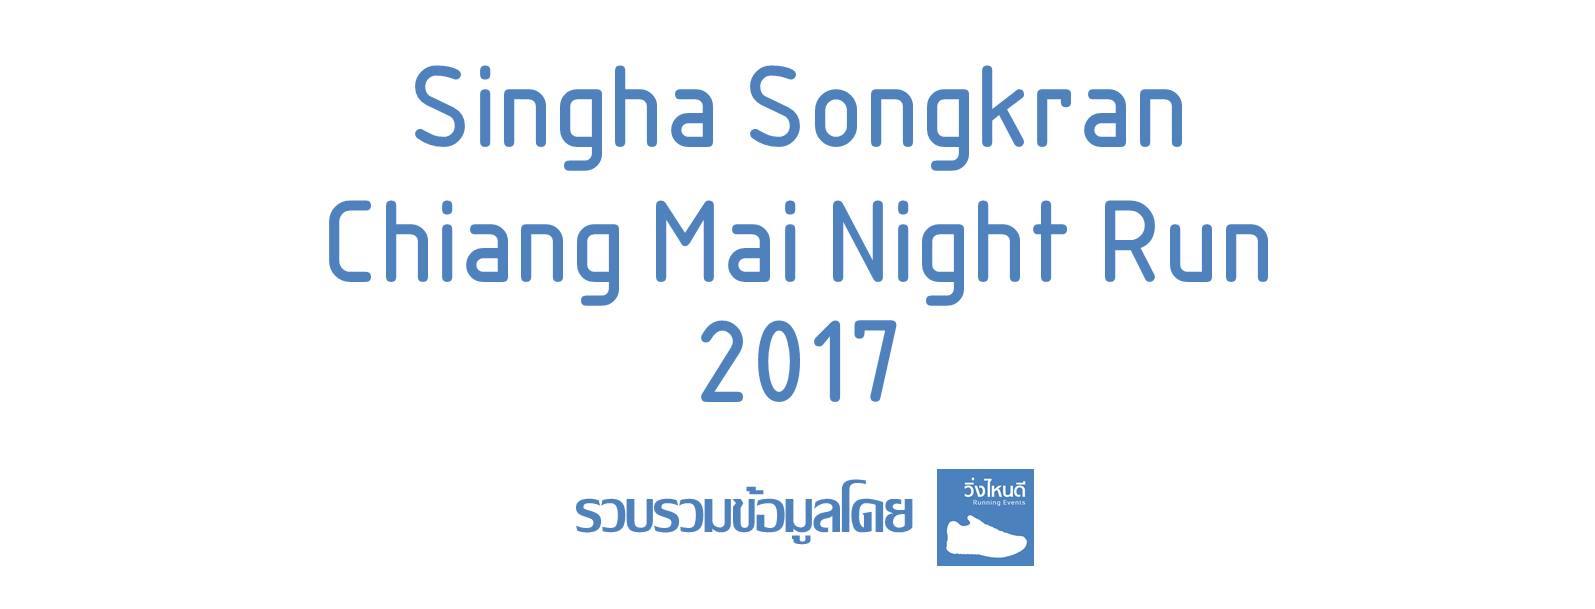 Singha Songkran Chiang Mai Night Run 2017